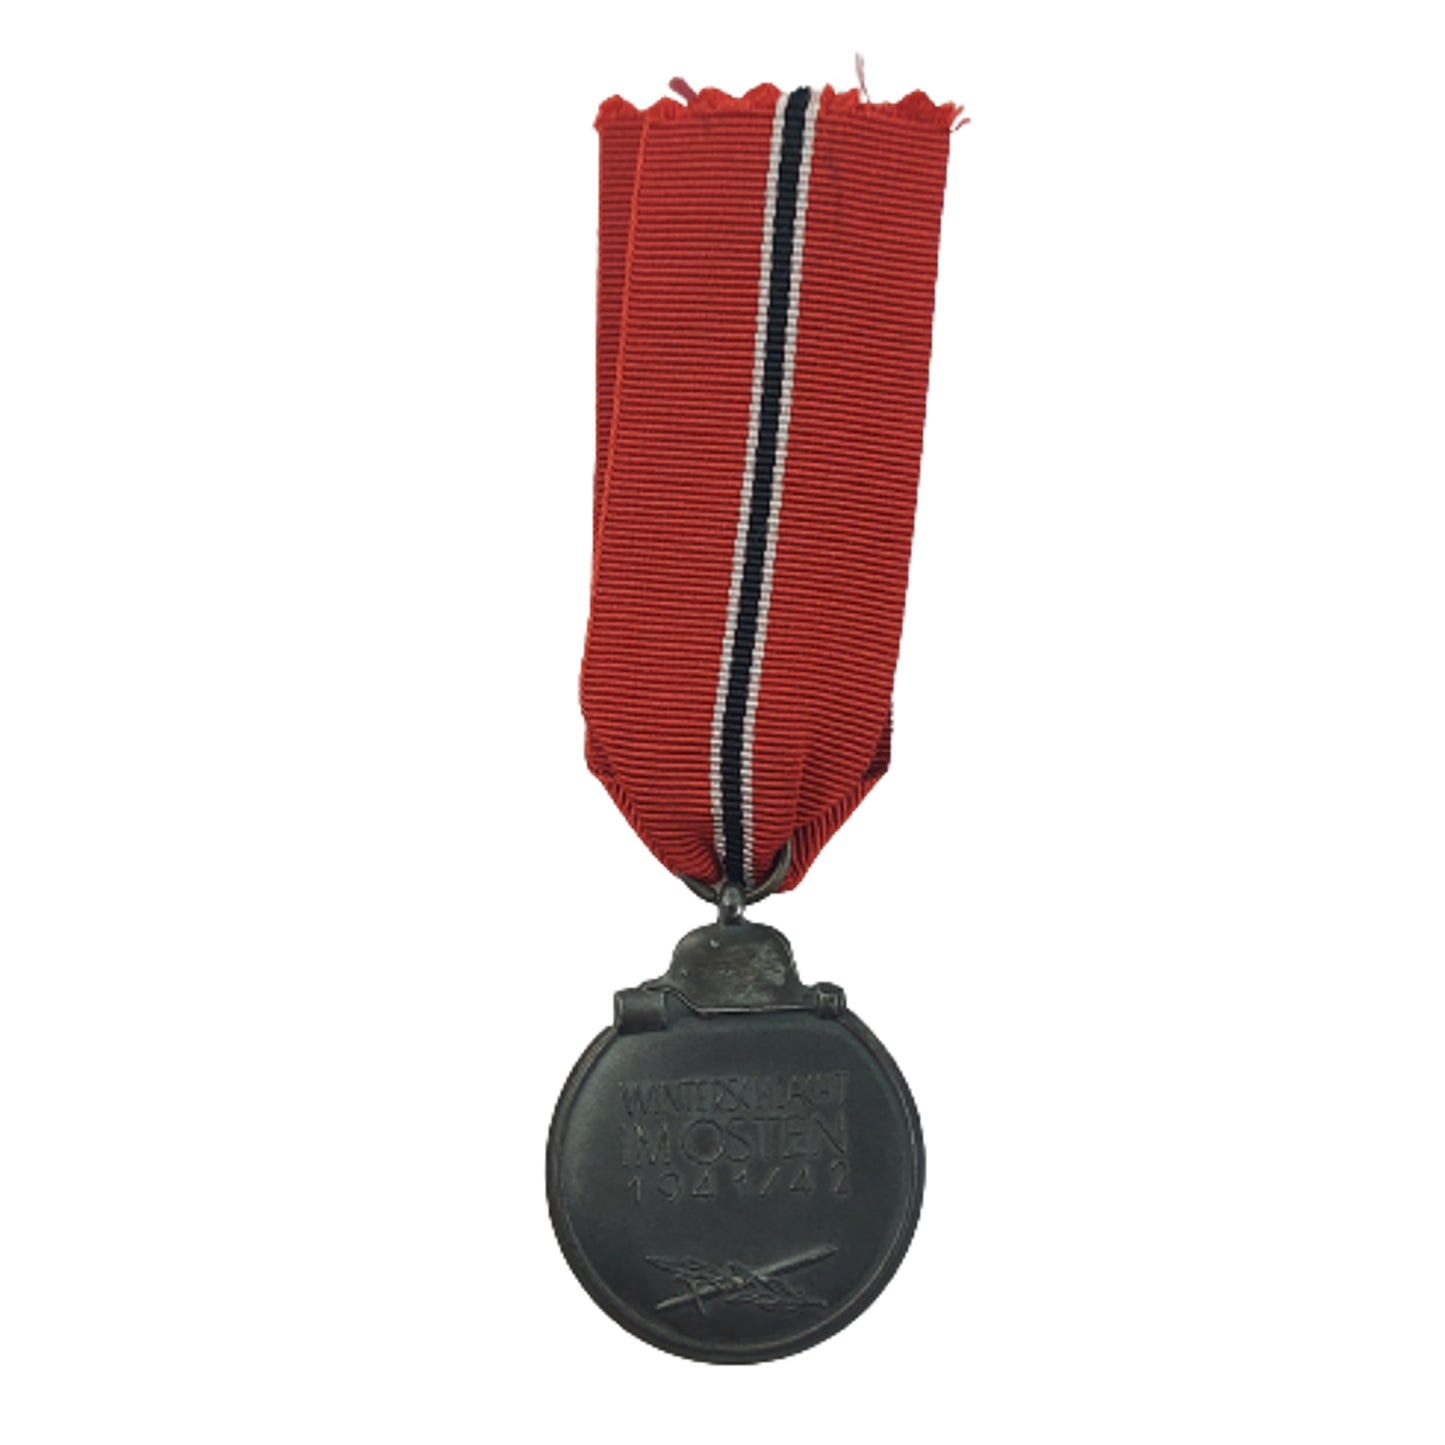 WW2 German Russian Front Medal 1941 -1942